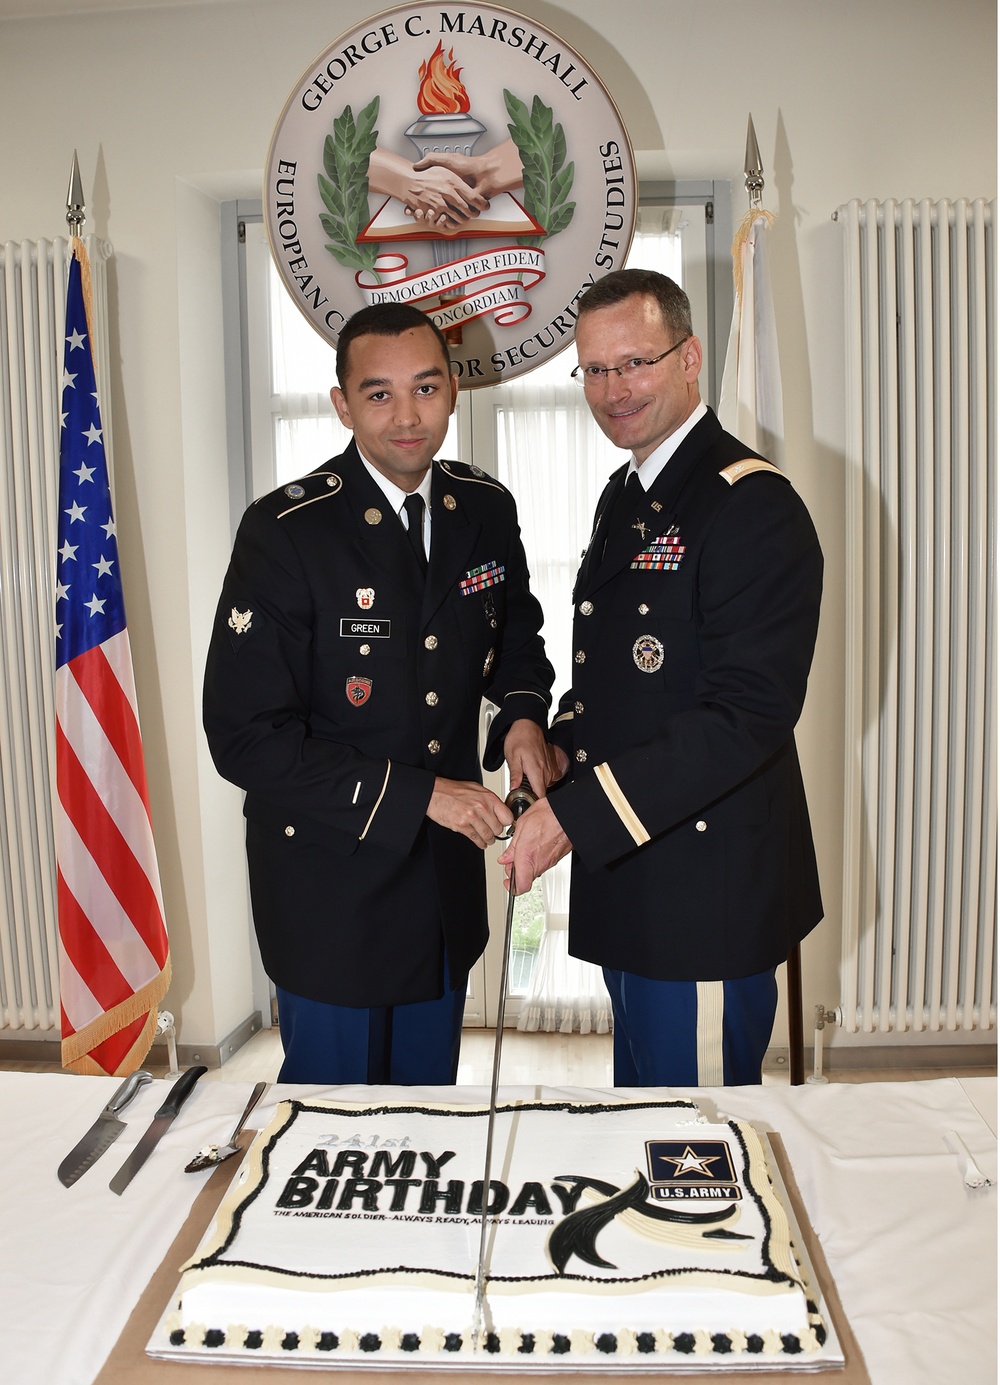 George C. Marshall European Center Celebrates Army 241st Birthday